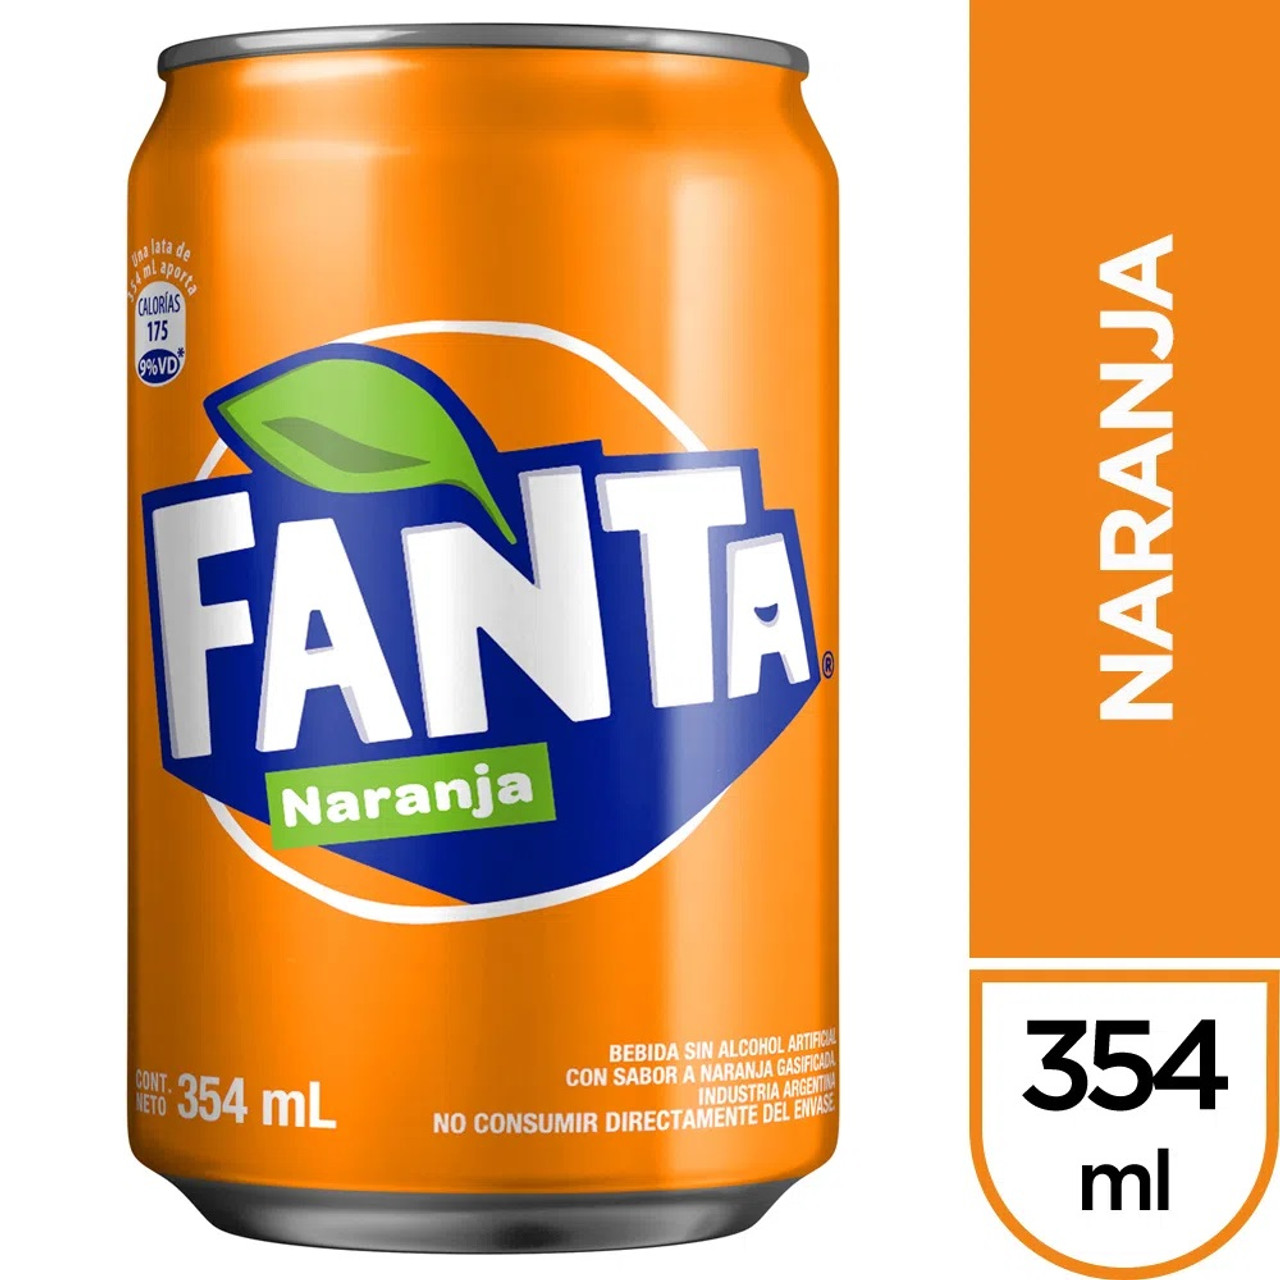 Fanta Naranja Orange Soda Classic Fanta Flavor, 354 ml / 11.97 fl oz can  (pack of 6 cans)